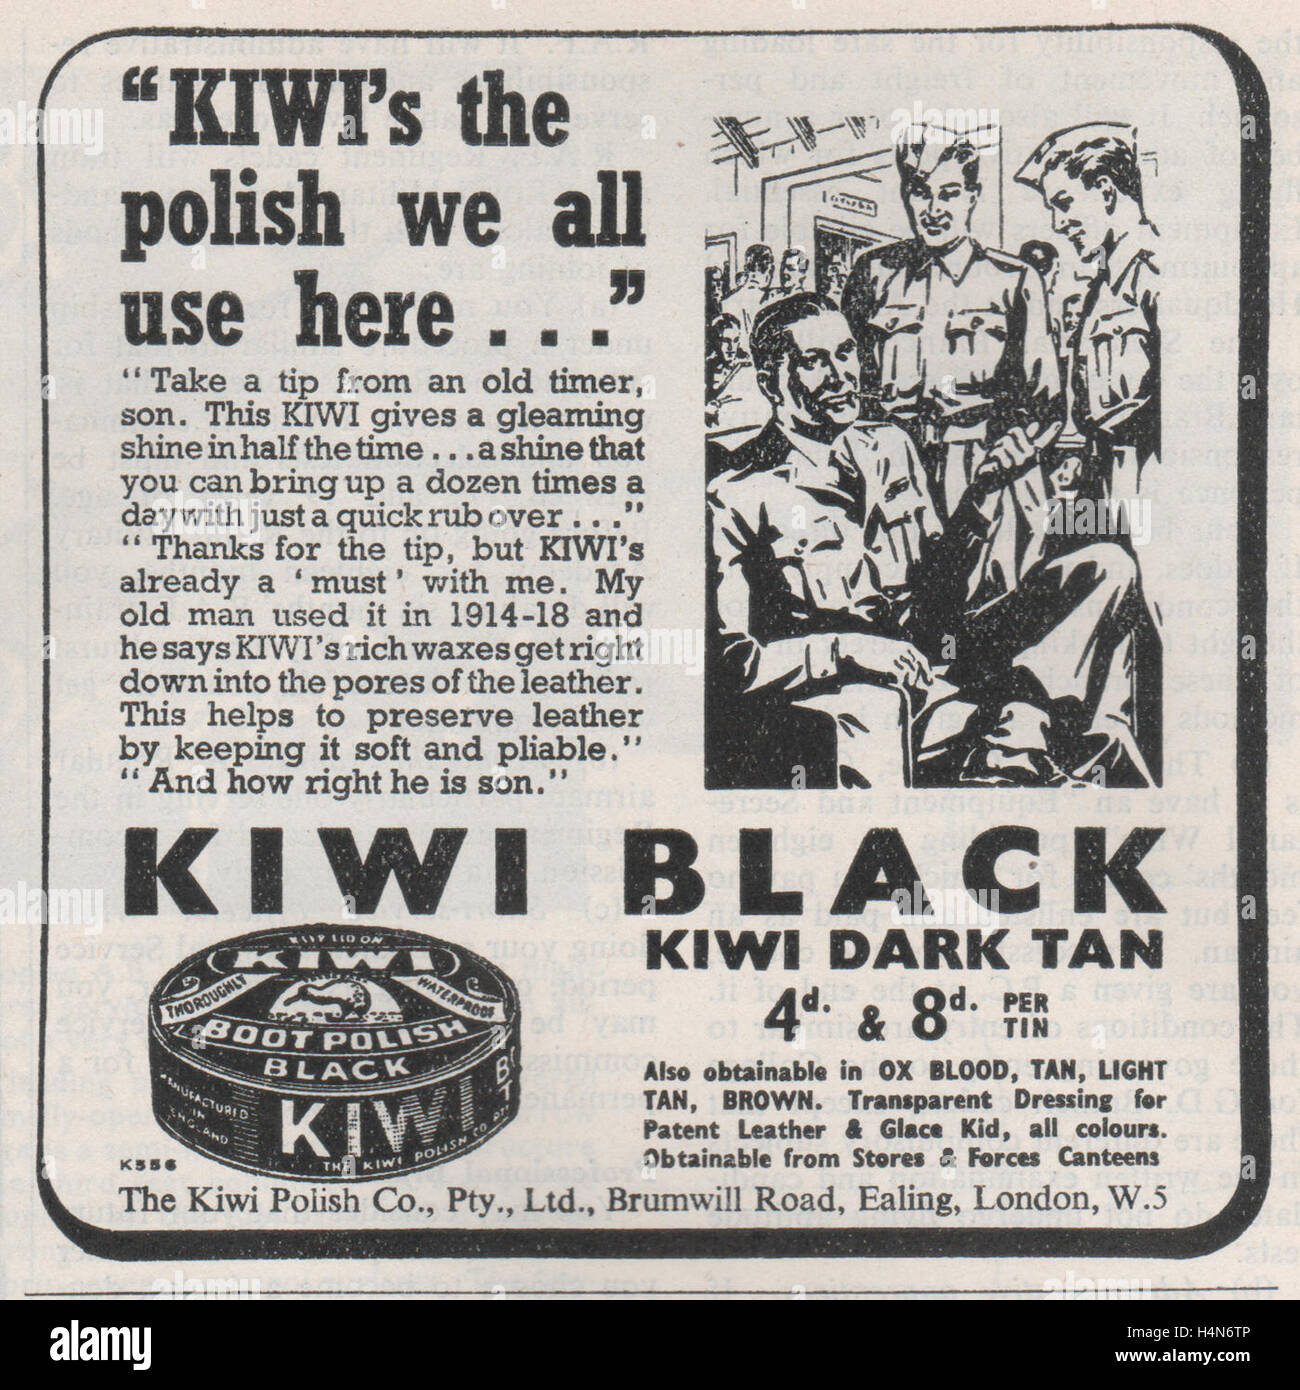 Vintage Kiwi shoe polish magazine advertisement with the strap line showing RAF personnel  discussing the merits of using Kiwi polish published February 1947. Stock Photo